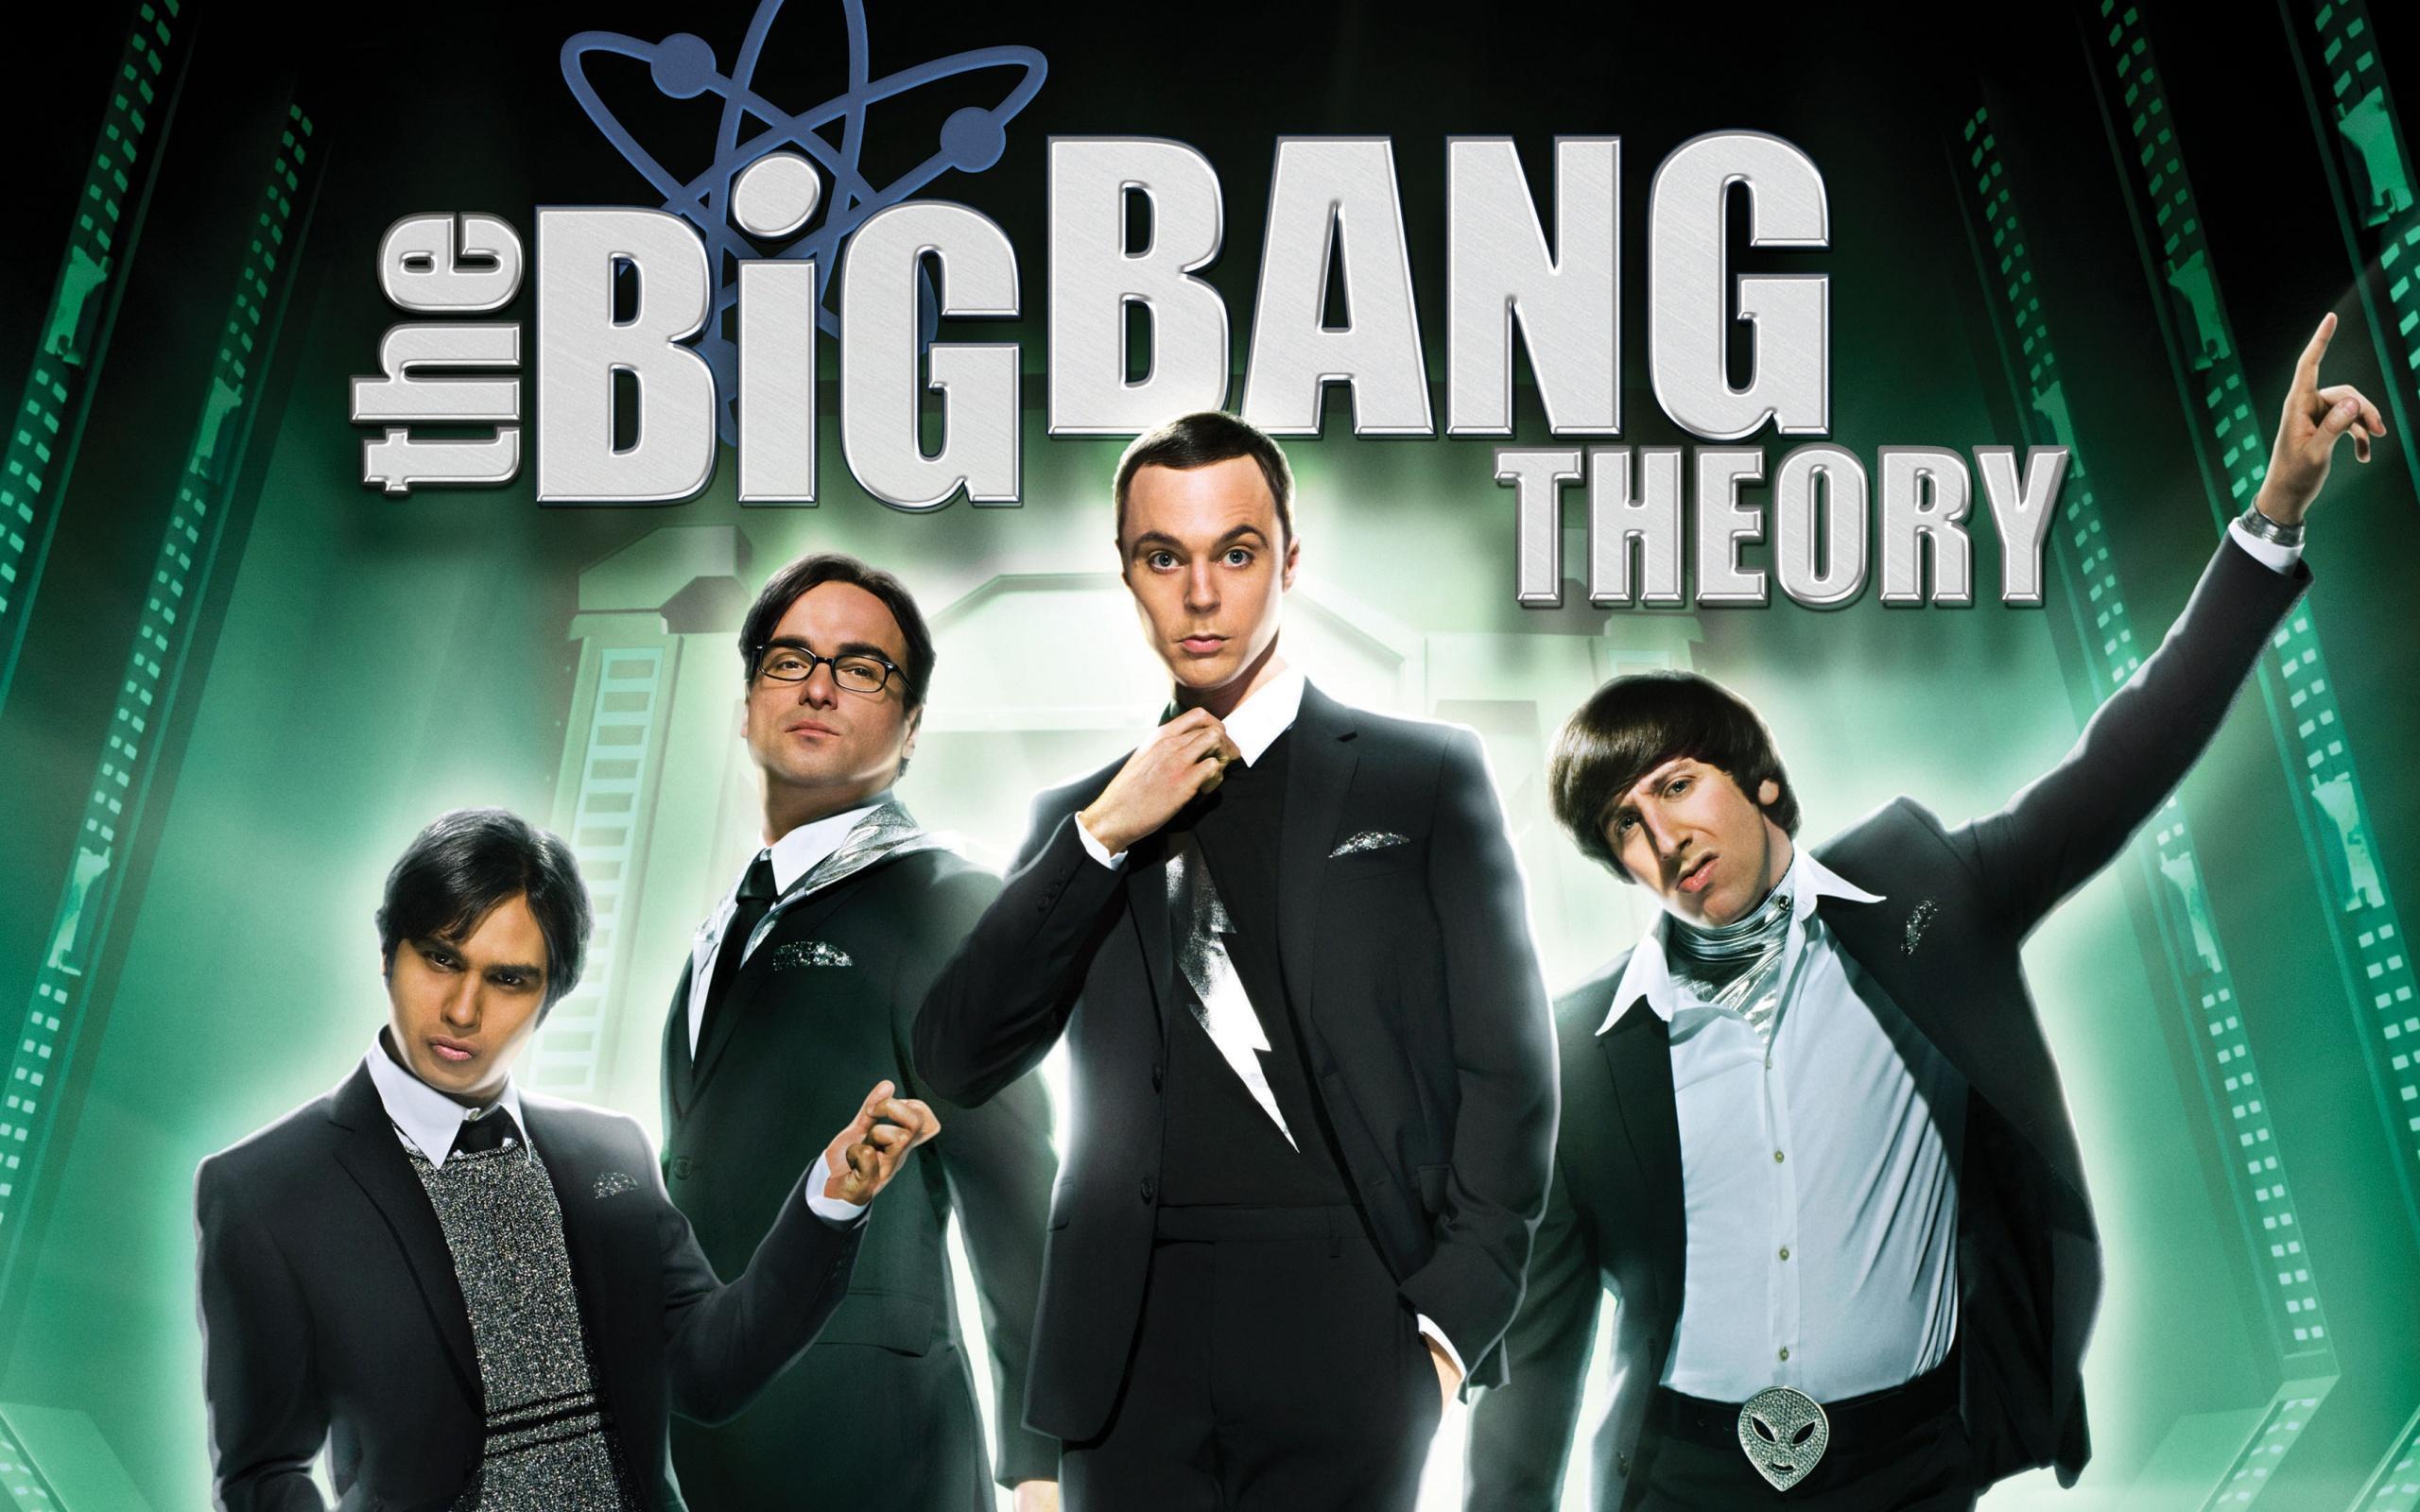 The Big Bang Theory 2014 TV Series Wallpaper Wide or HD. TV